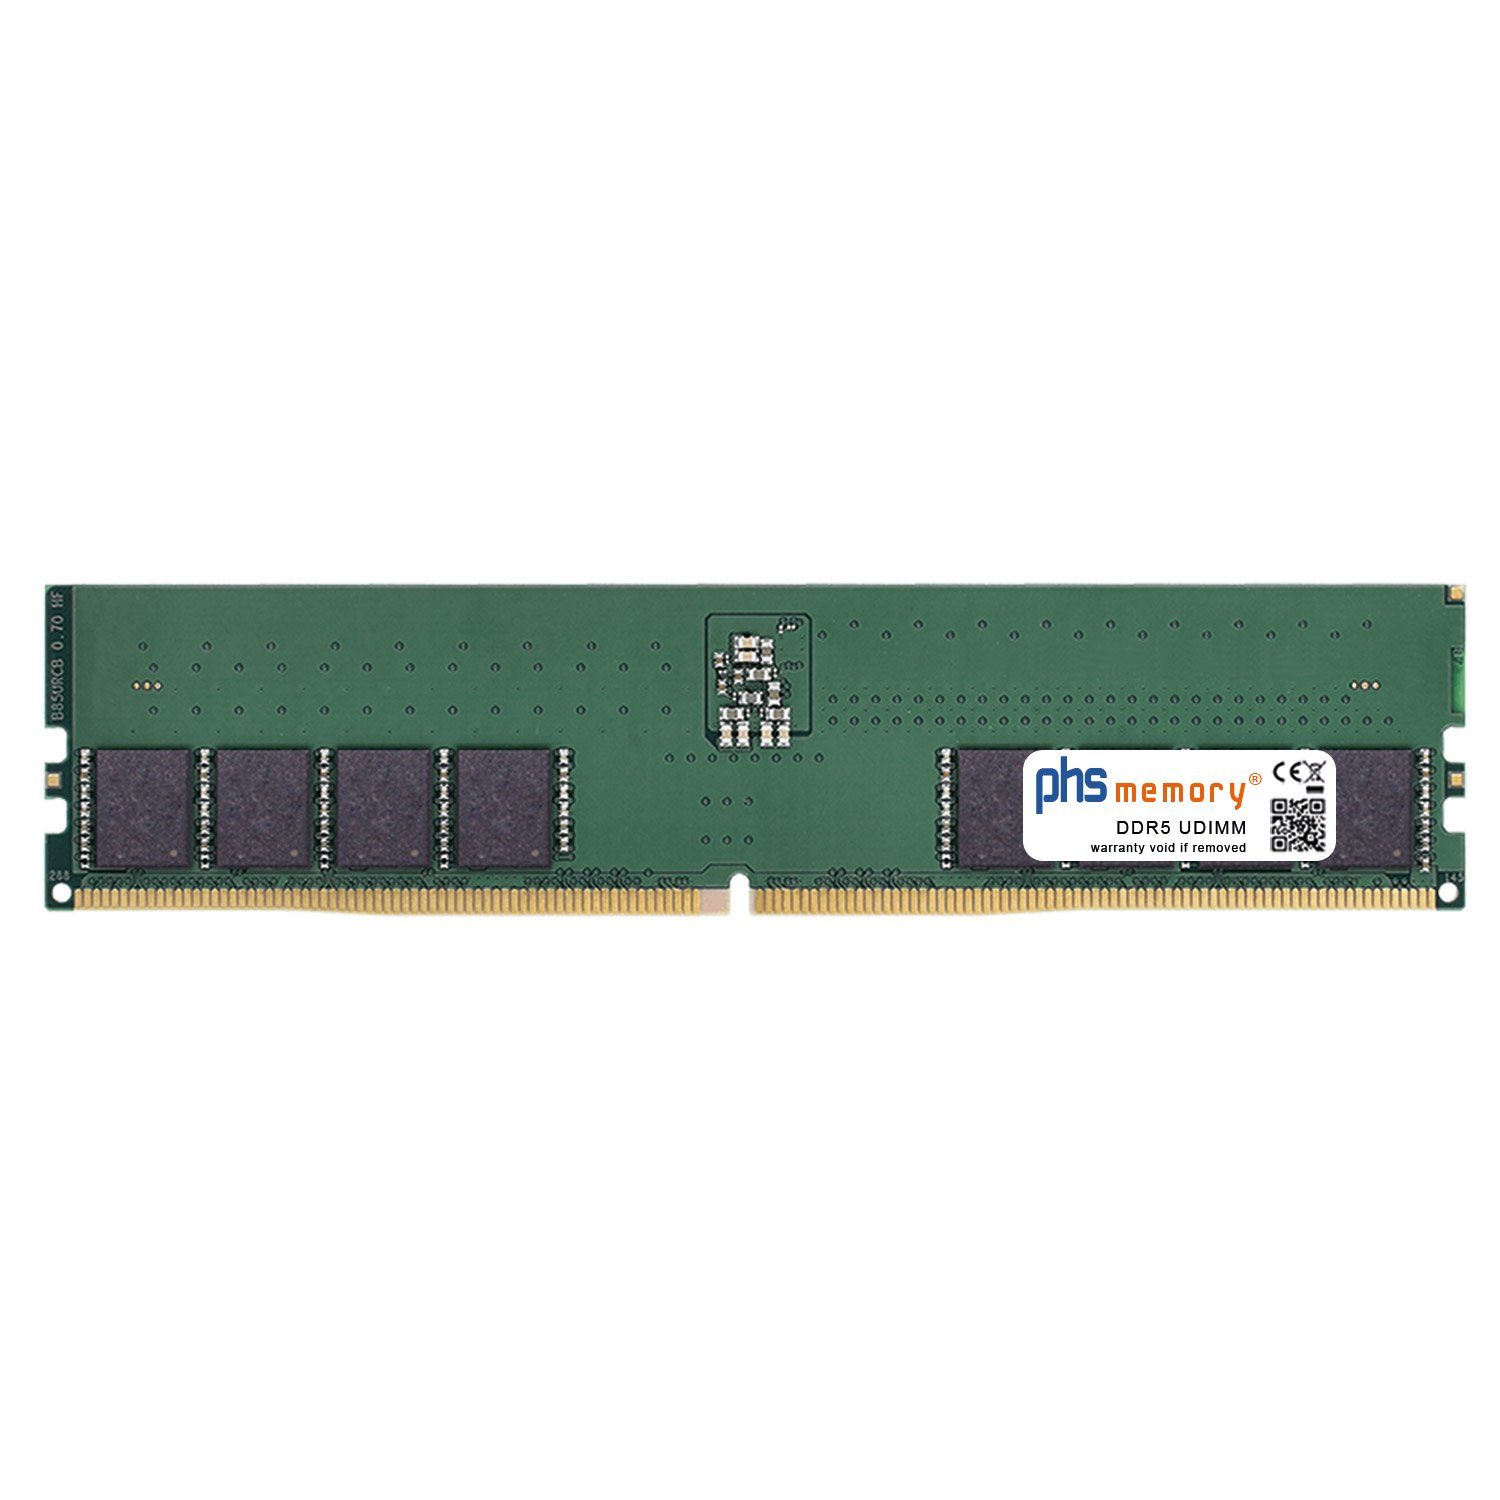 PHS-memory RAM für Captiva Ultimate Gaming R70-990 Arbeitsspeicher